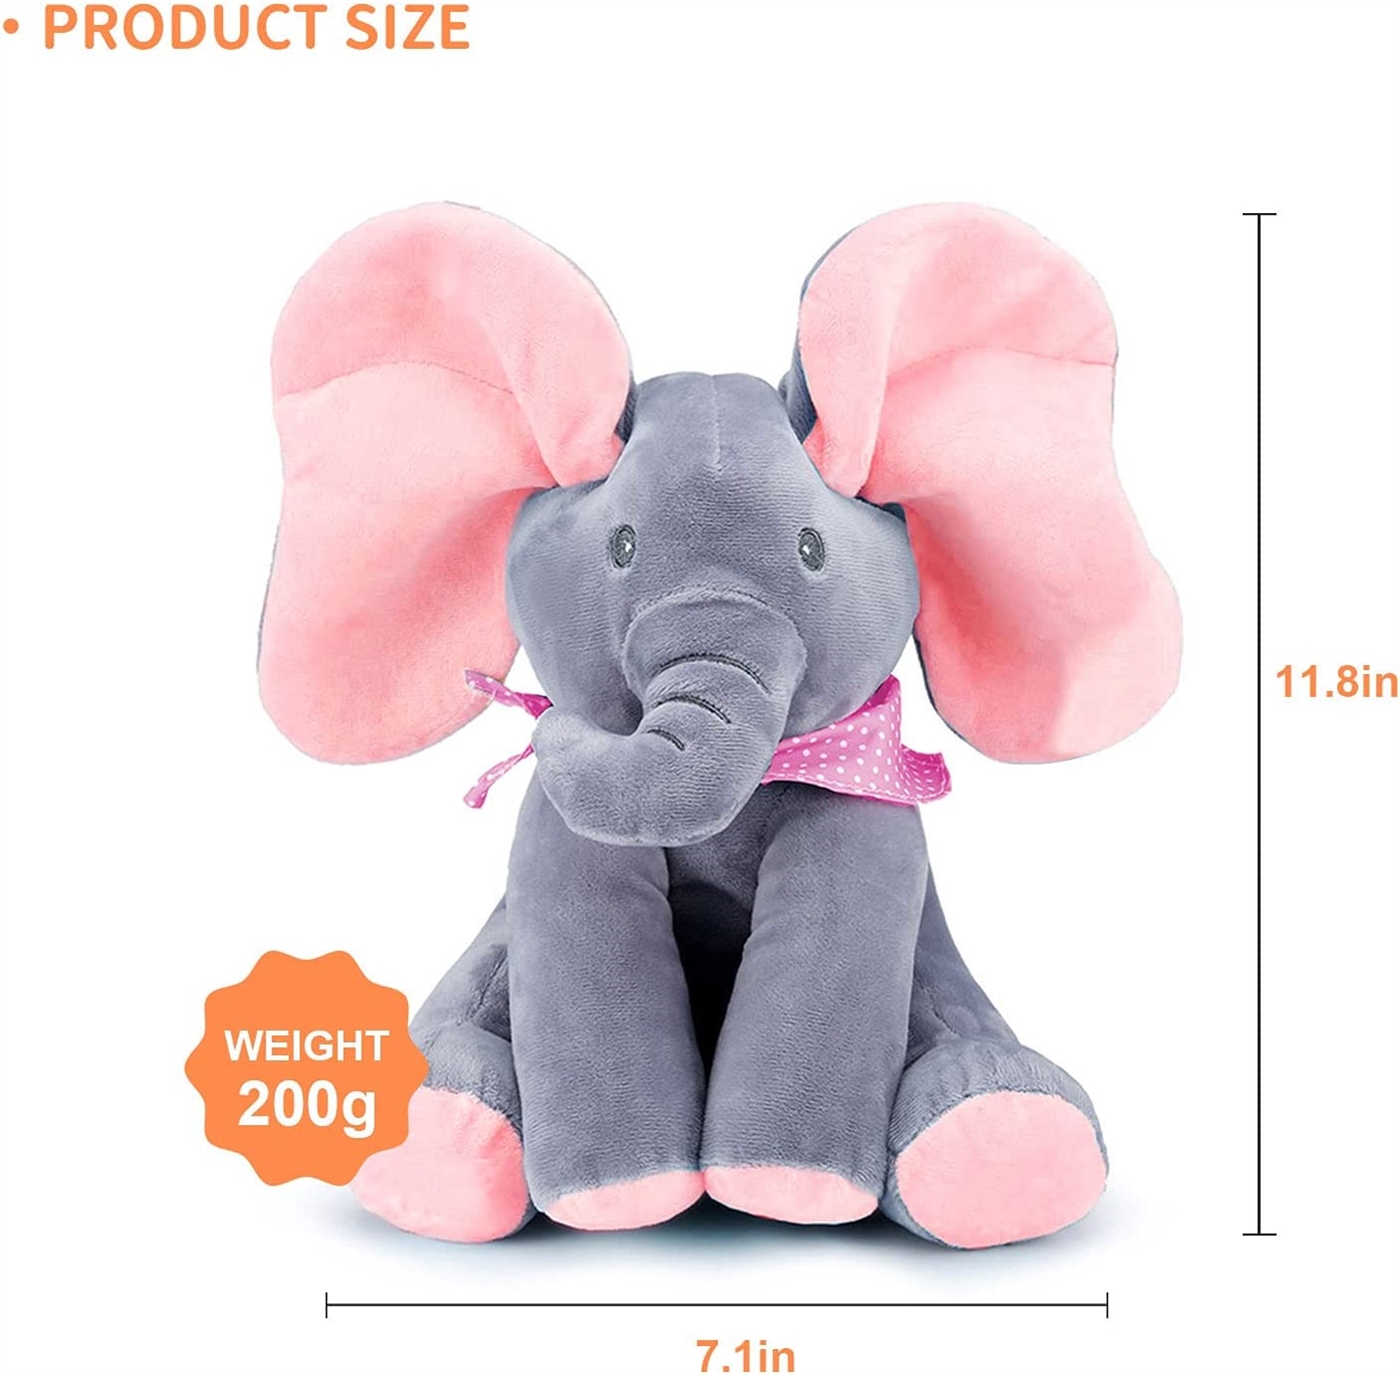 kibtoy Peek-a-boo elephant plush toy great size for children to play